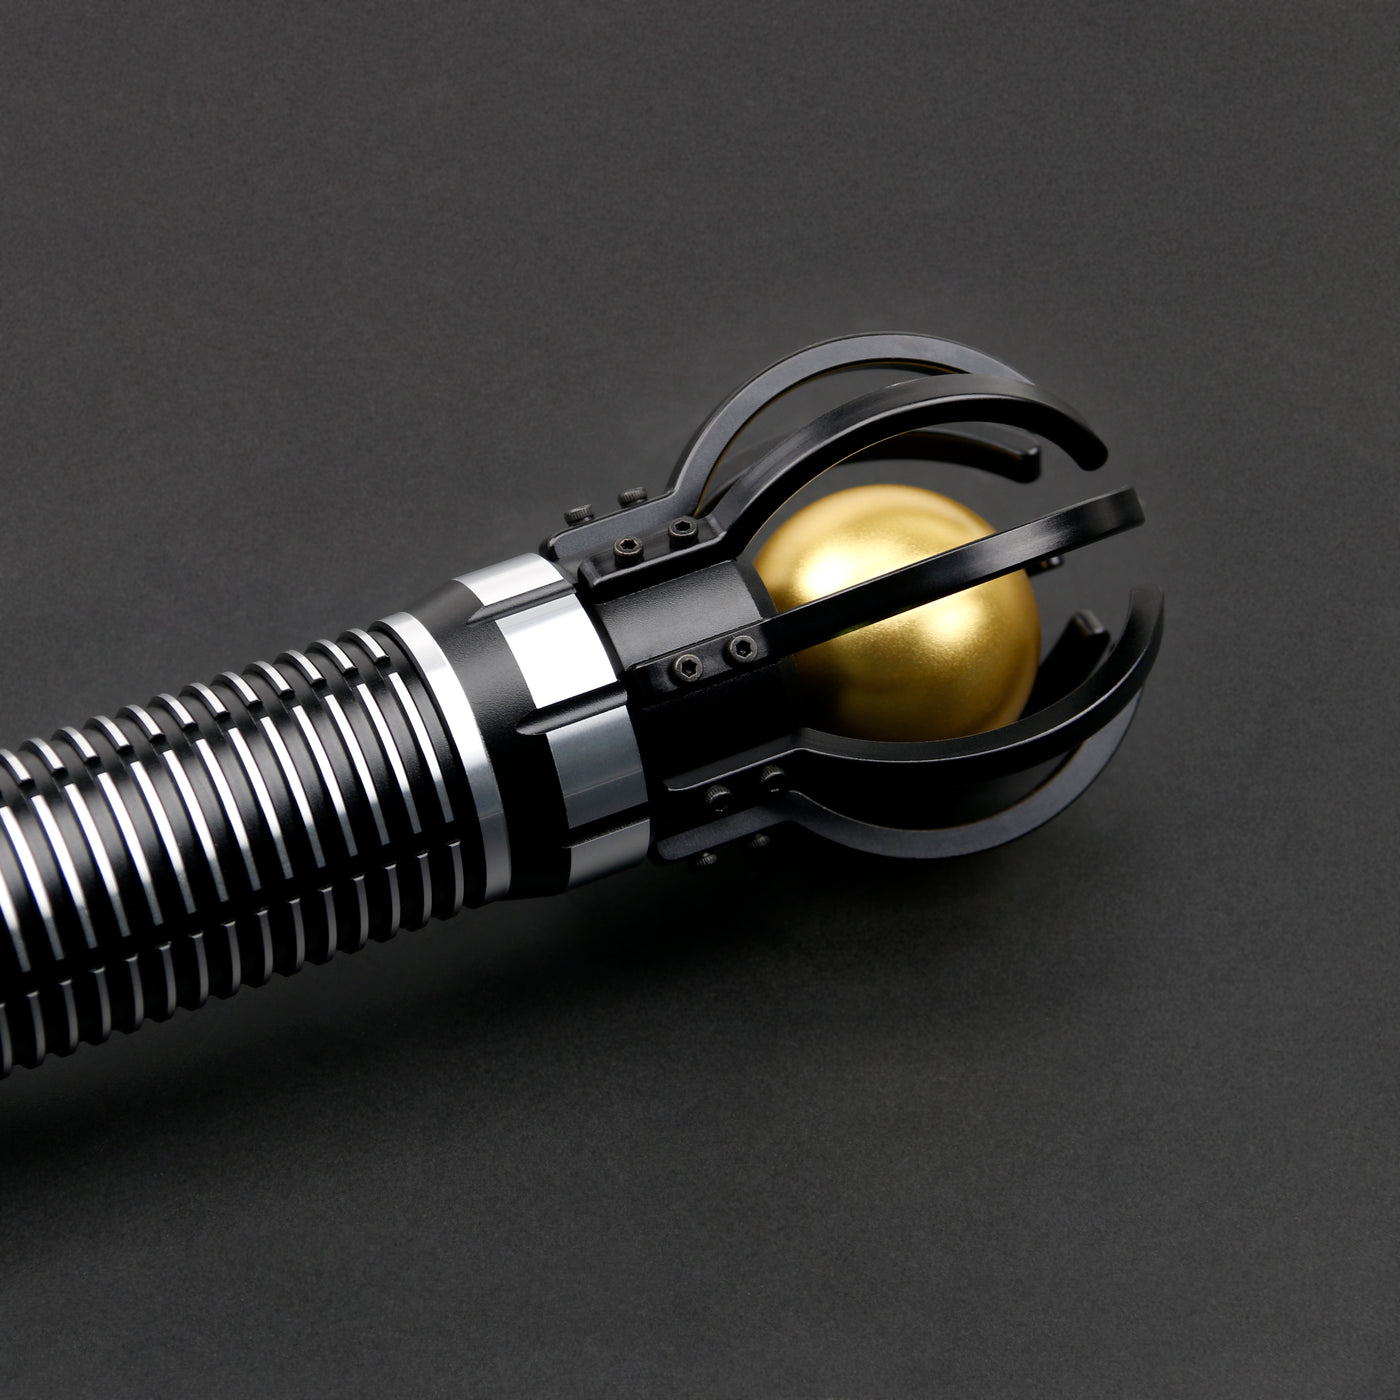 Cosmic Strike - KenJo Sabers - Star Wars Lightsaber replica Jedi Sith - Best sabershop Europe - Nederland light sabers kopen -